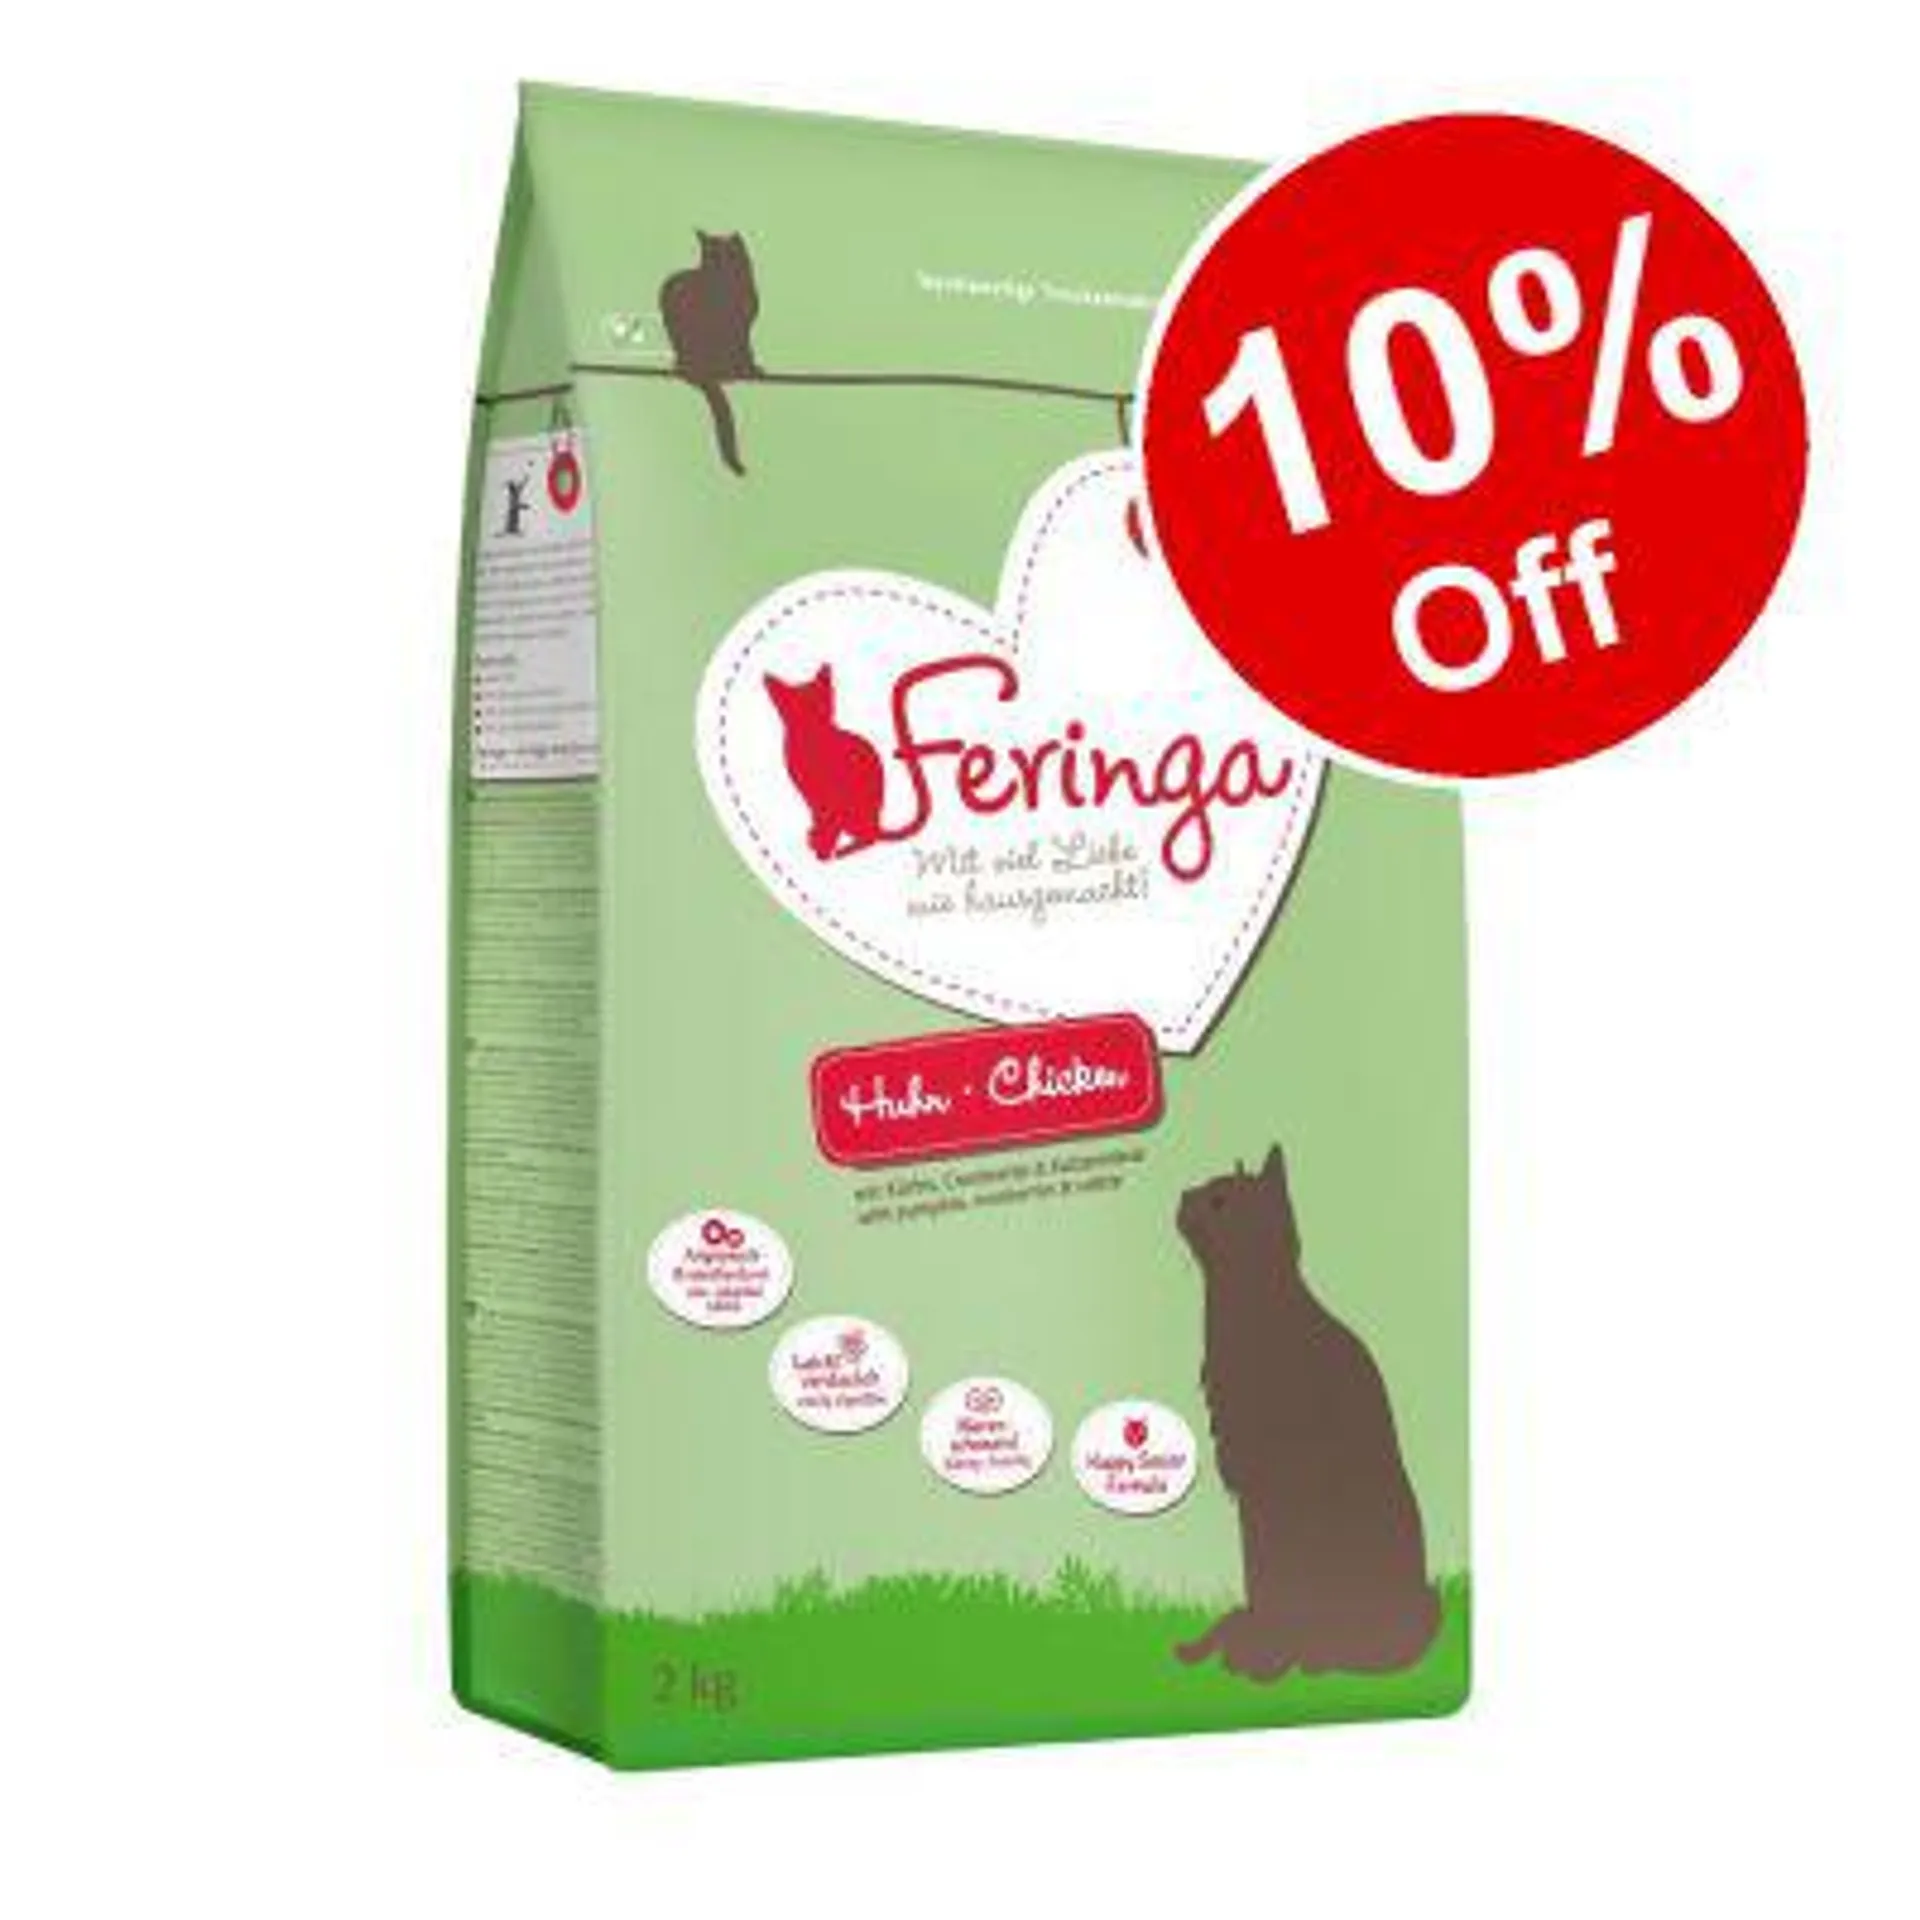 6kg Feringa Dry Cat Food - 10% Off!*